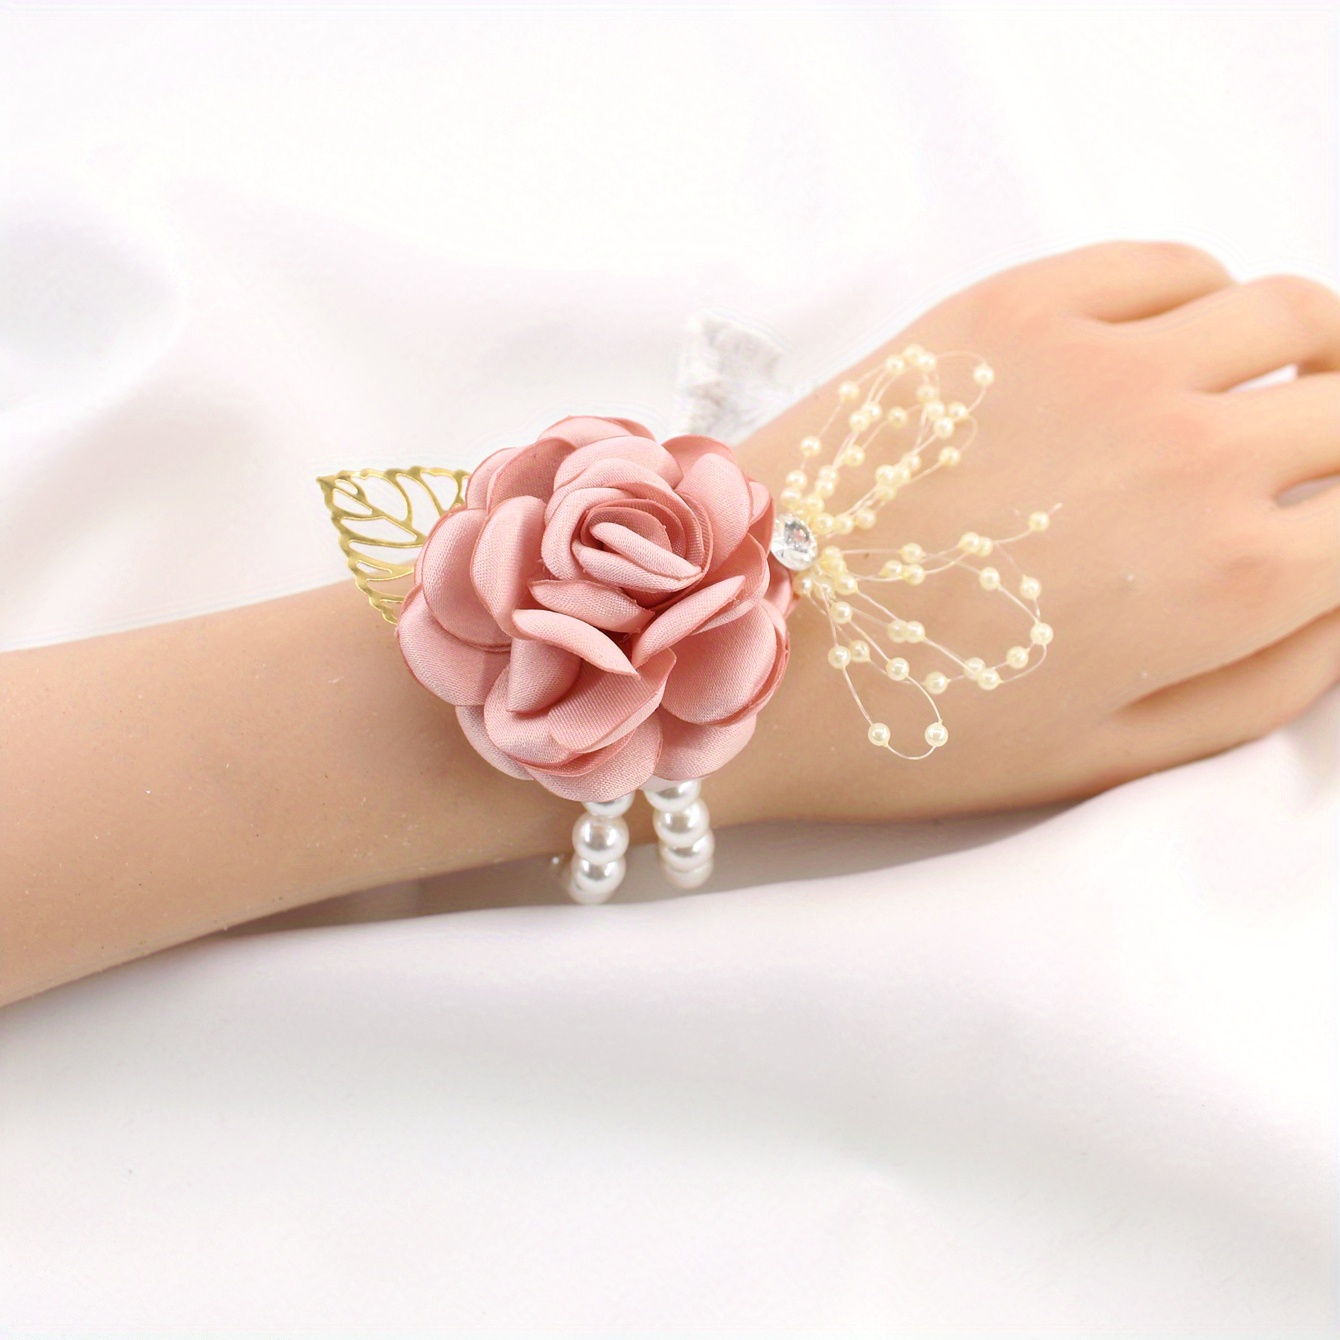 Flonding Girl Bridesmaid Wrist Corsage Bridal Silk Wrist Flower with Faux Pearl Bead Stretch Bracelet Wristband Gold Leaf for Wedding Prom Hand